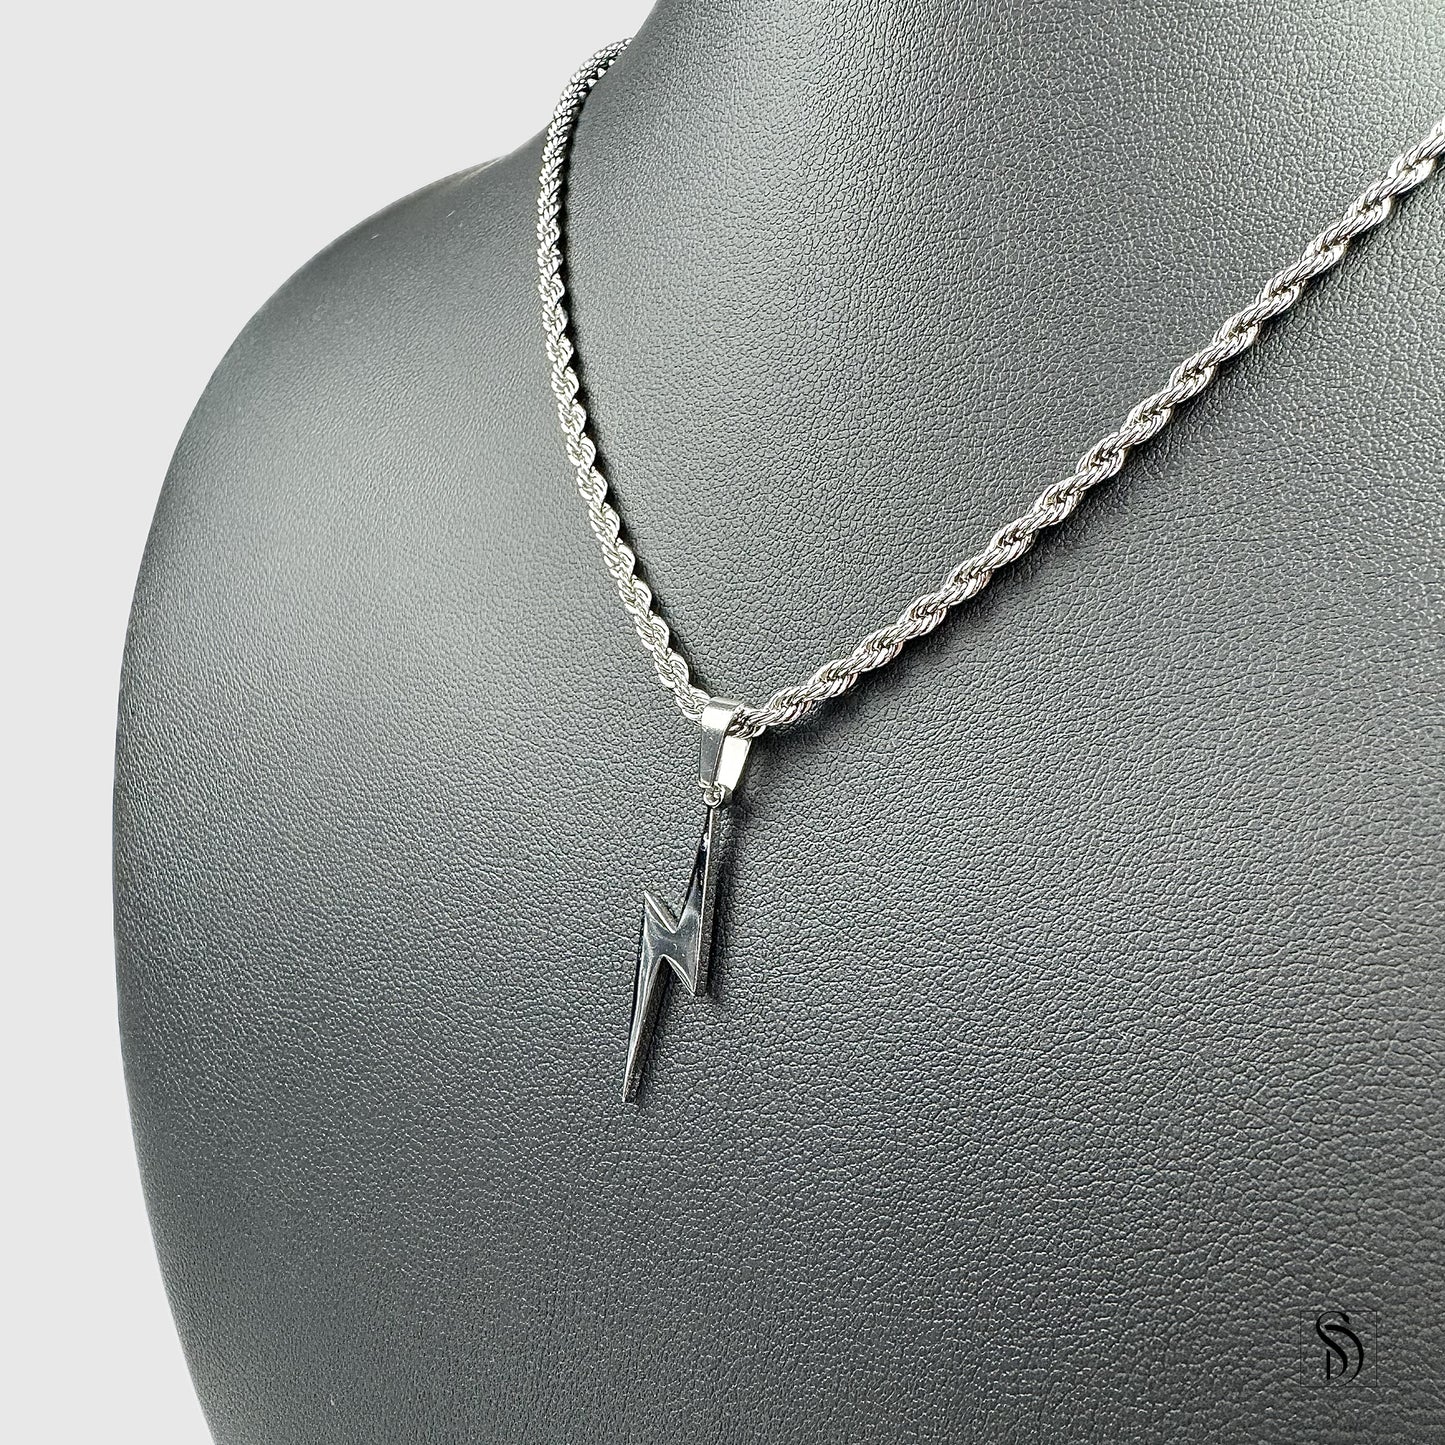 Silver Lightning Pendant Necklace